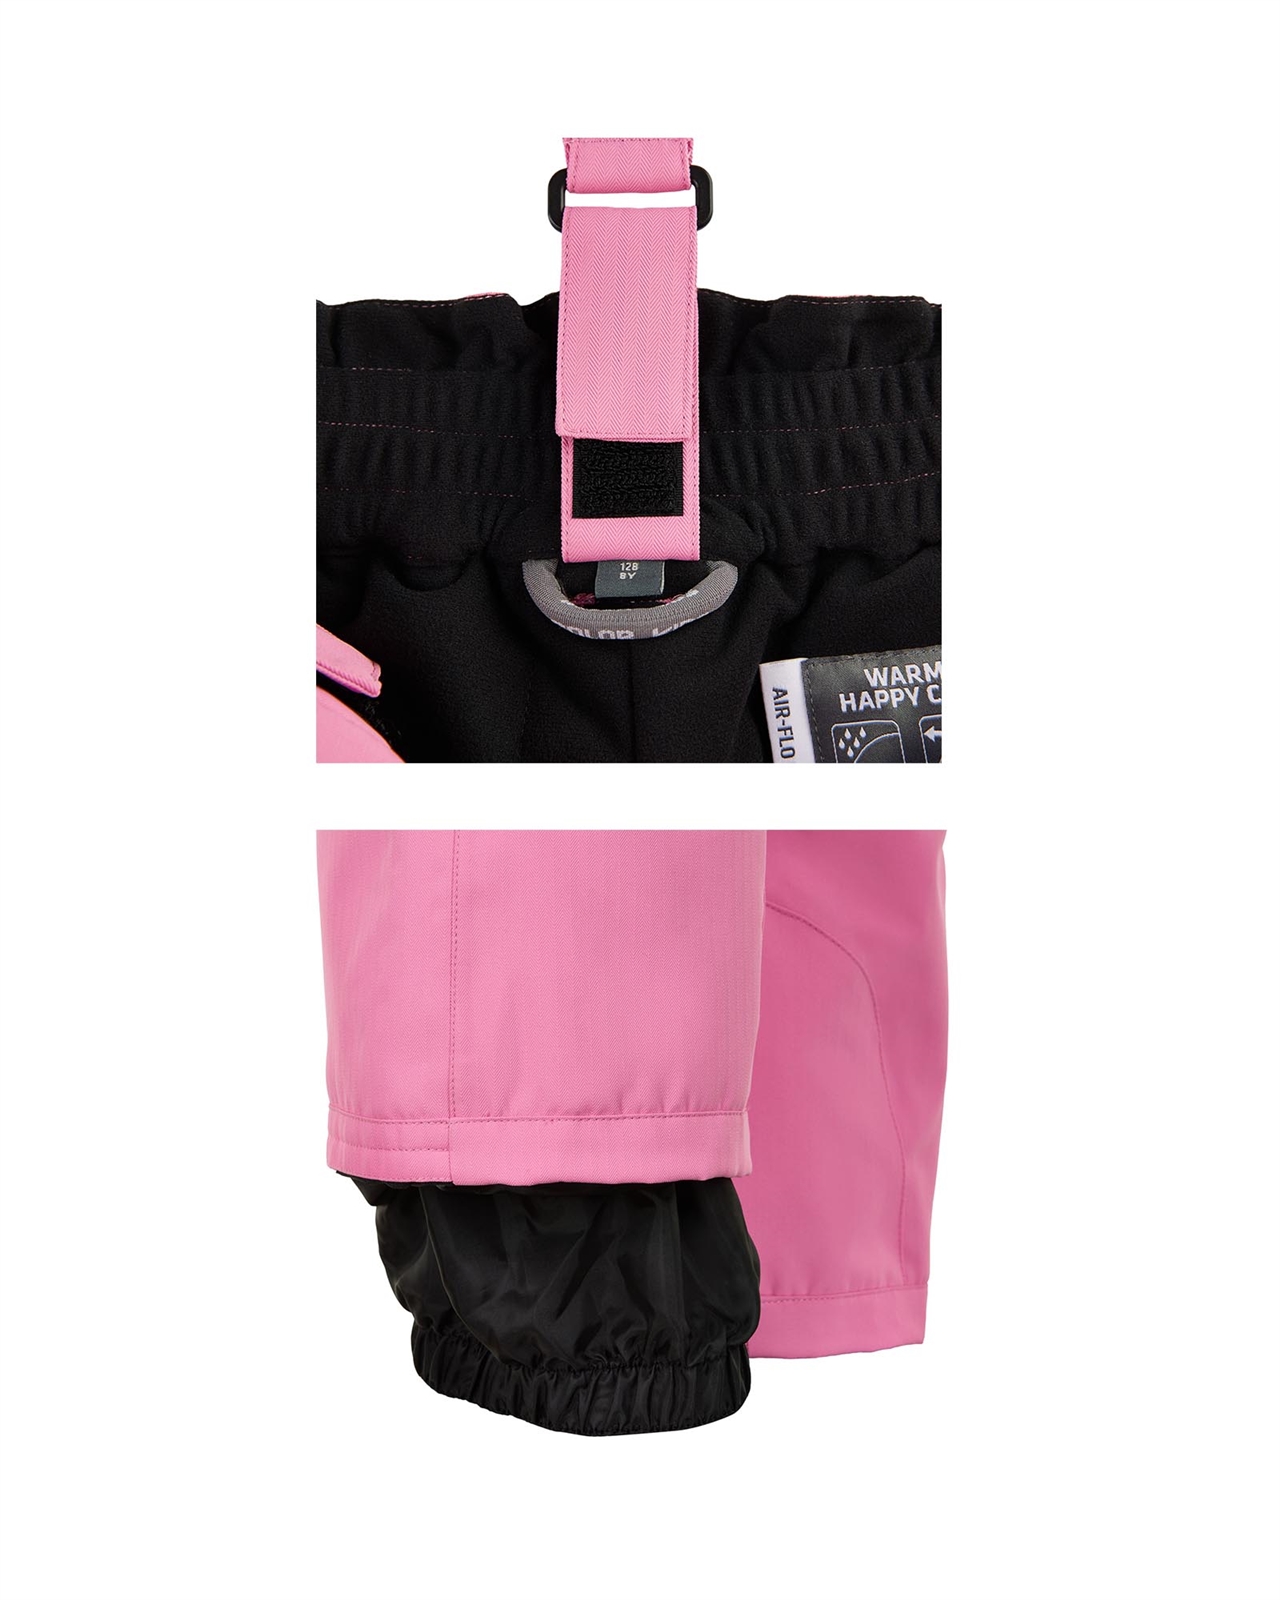 COLOR KIDS Girls' Ski Pants in Pink - Color Kids Snowsuits - Color Kids  Outerwear